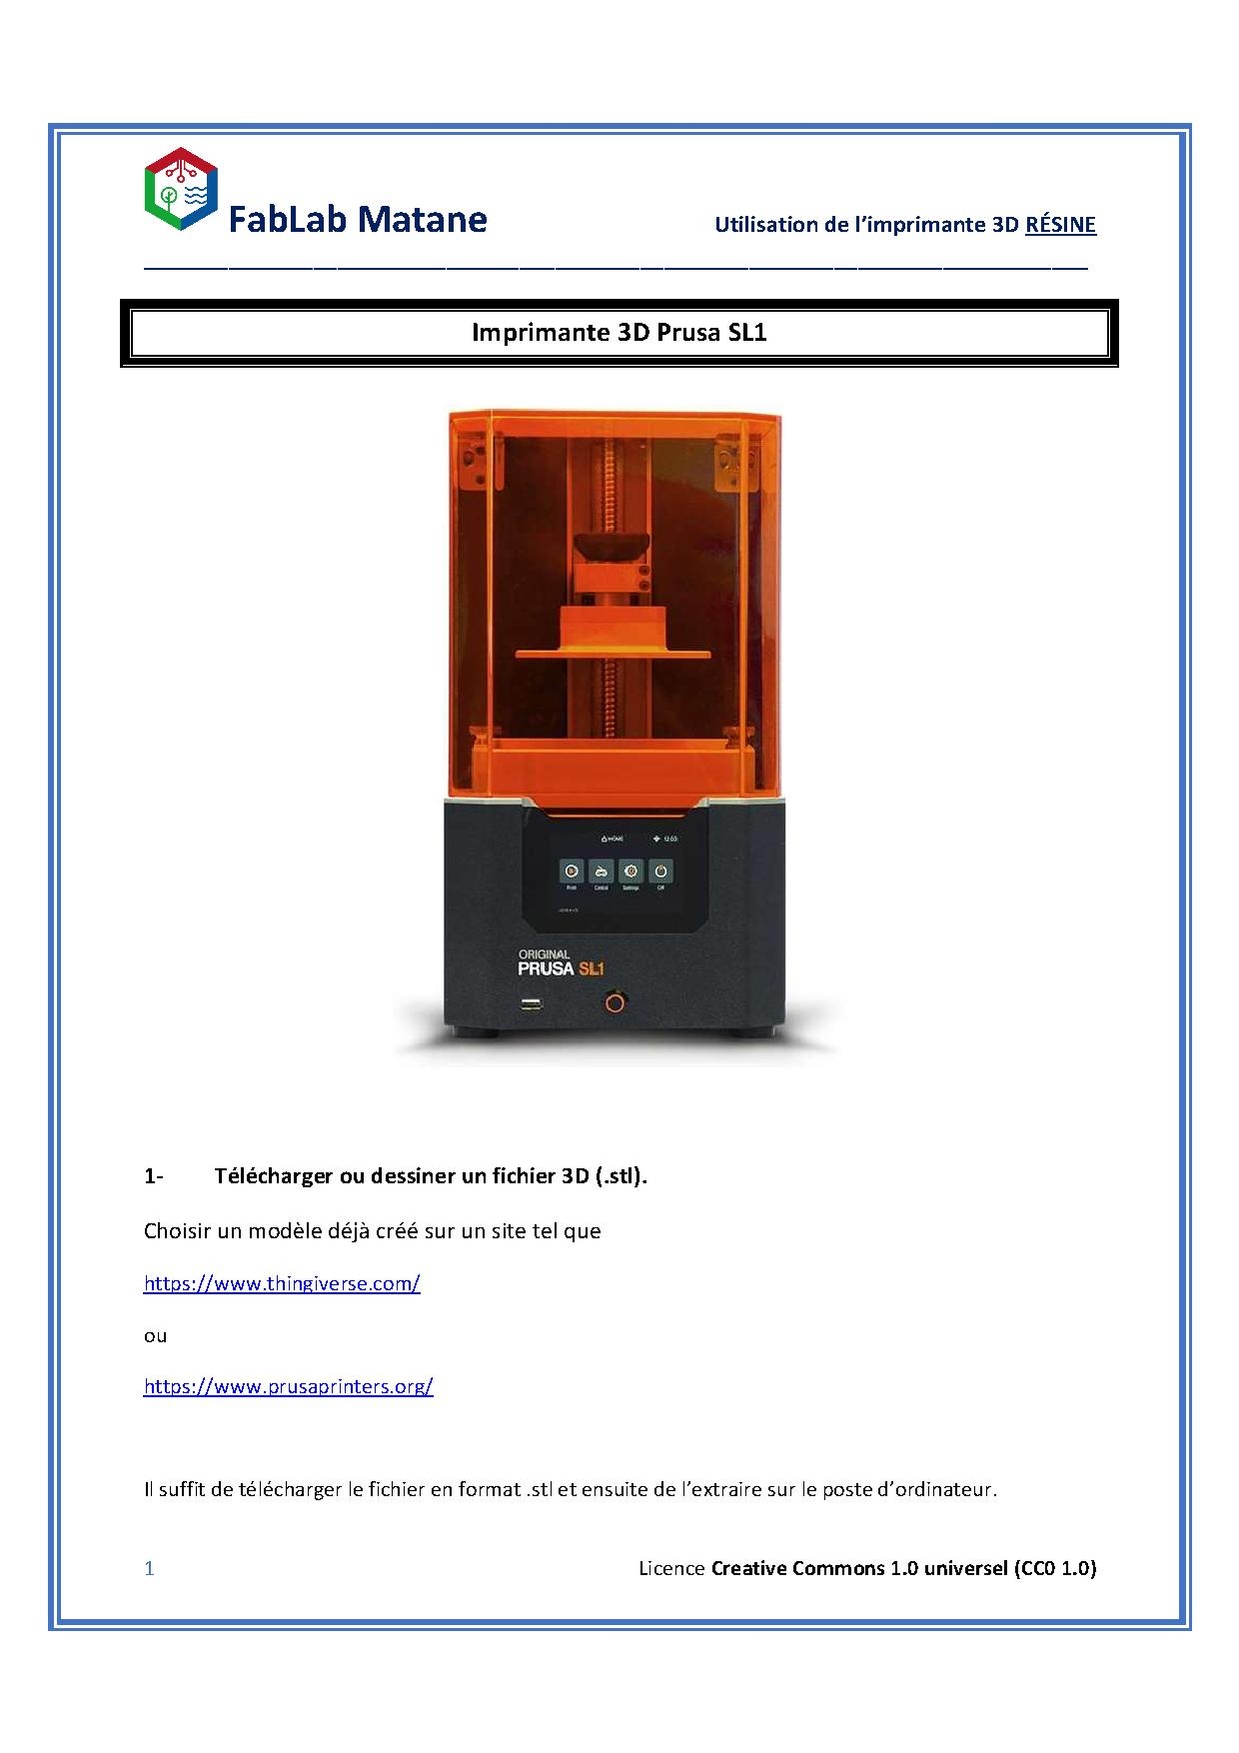 Guide Impression 3D Résine Prusa SL1.pdf